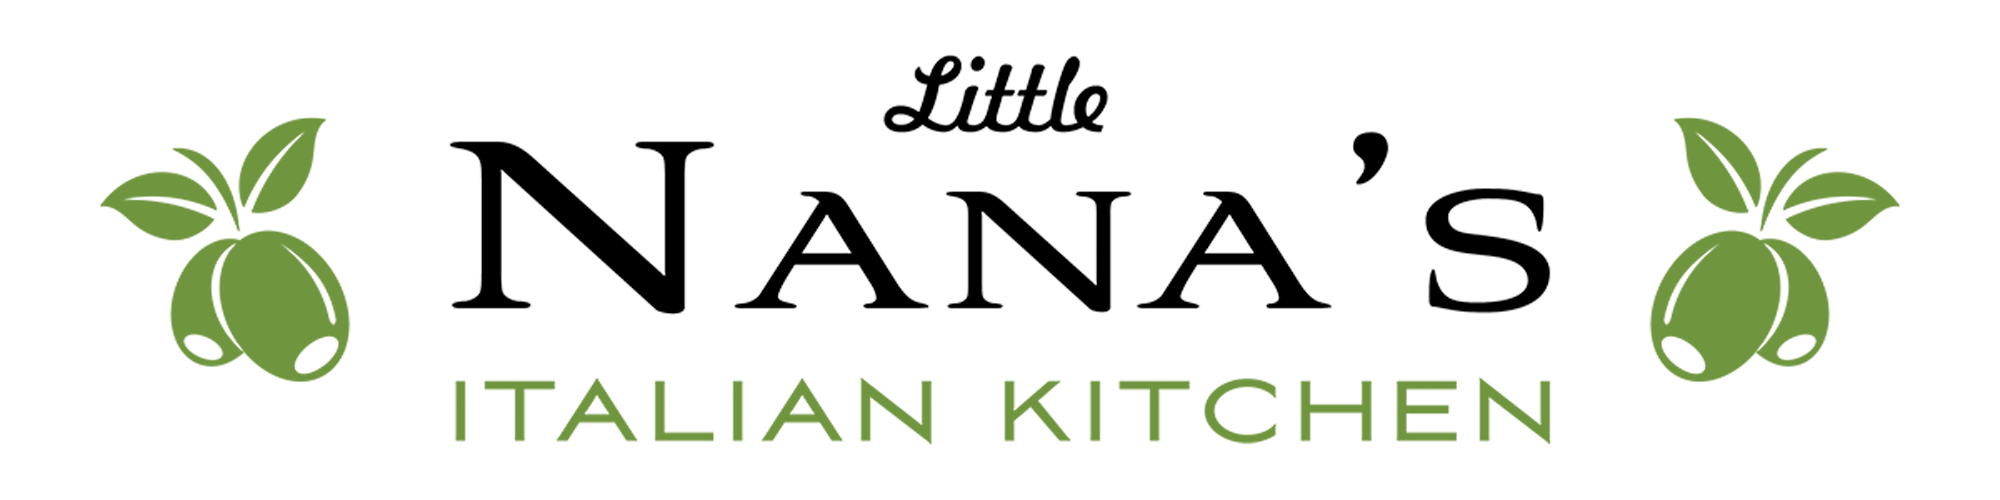 Little-Nanas-logo